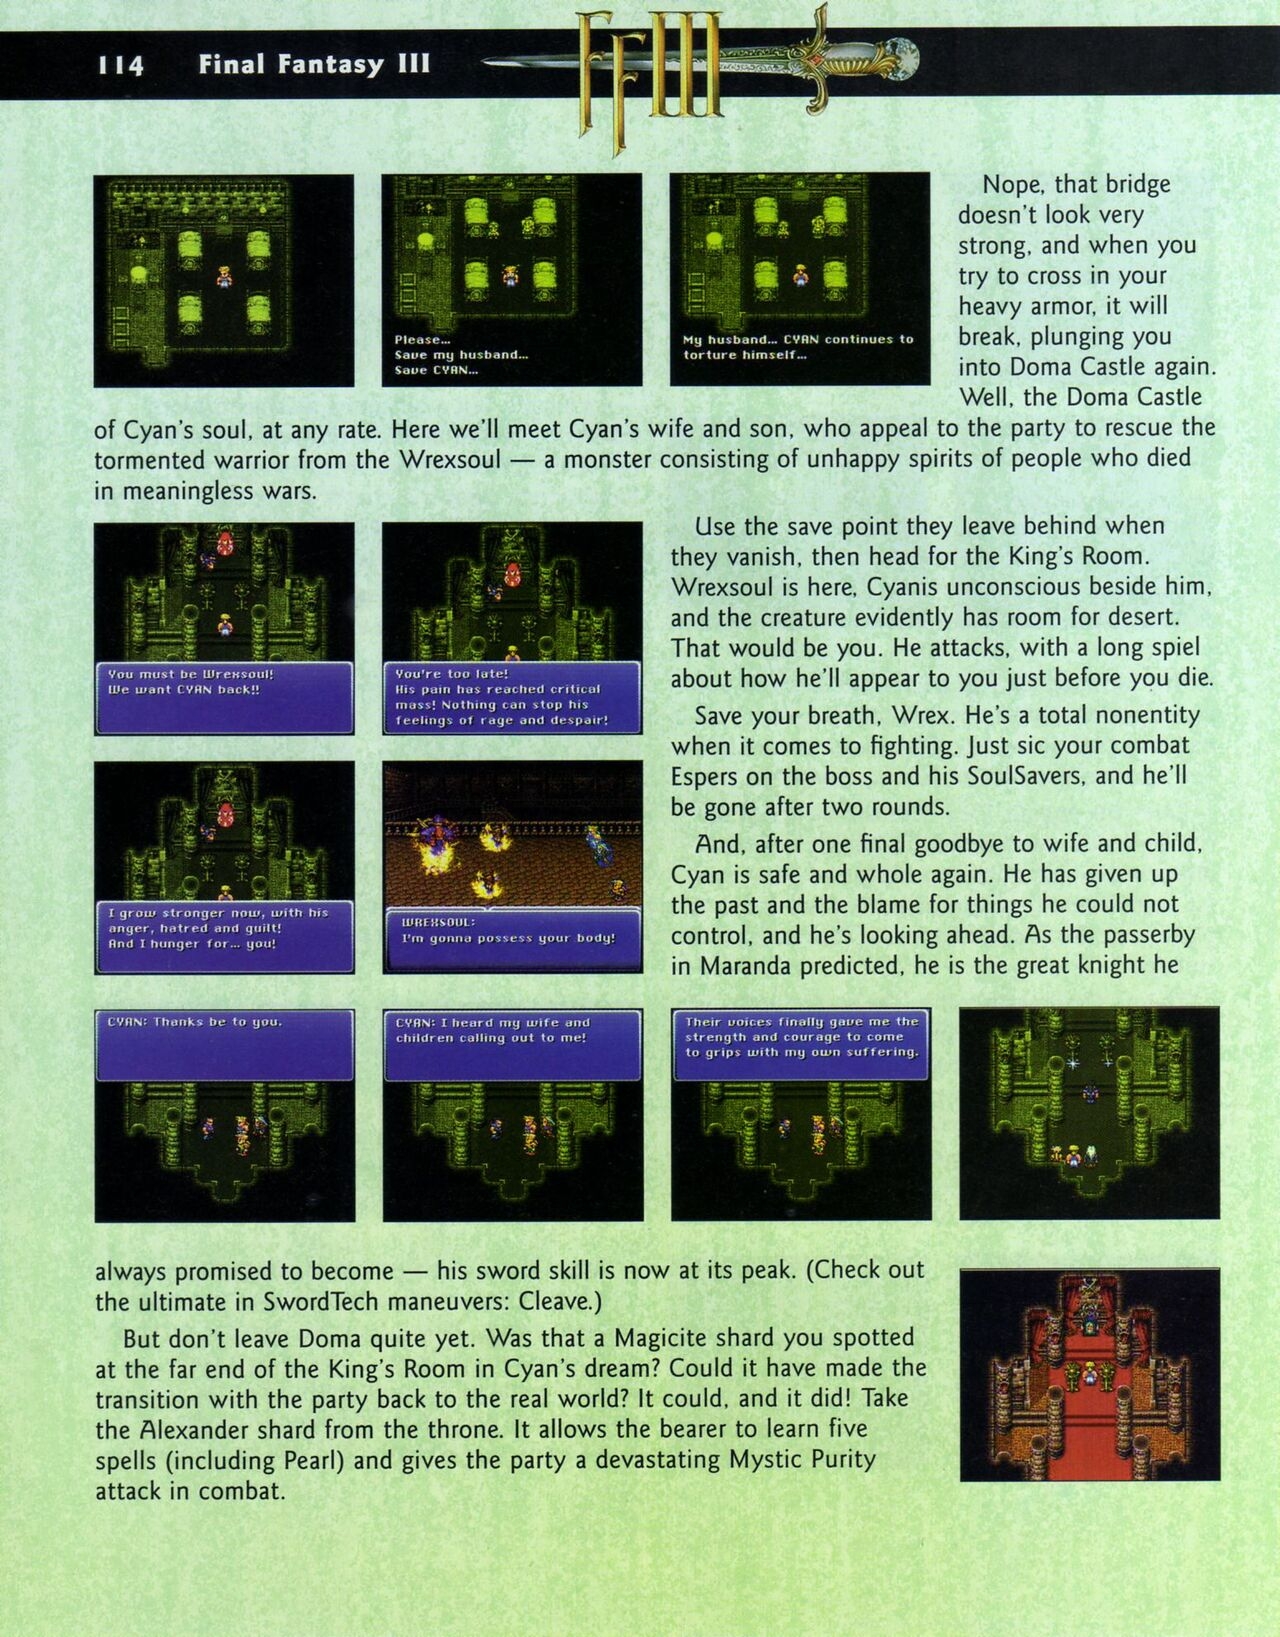 Final Fantasy III Players Guide 131